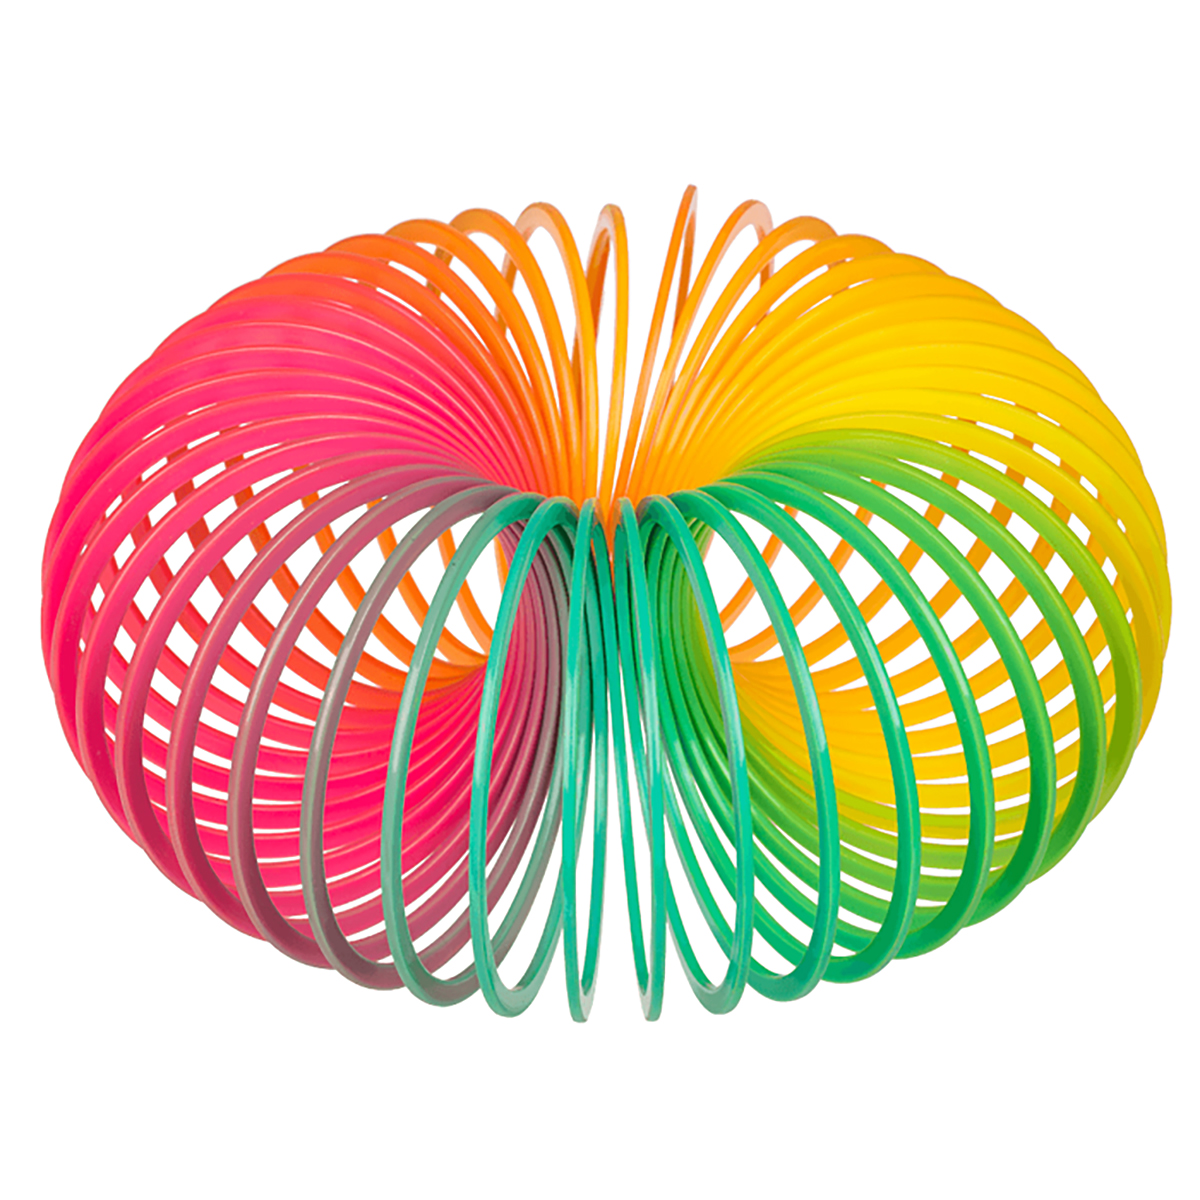 Rainbow Slinky - ShopMe